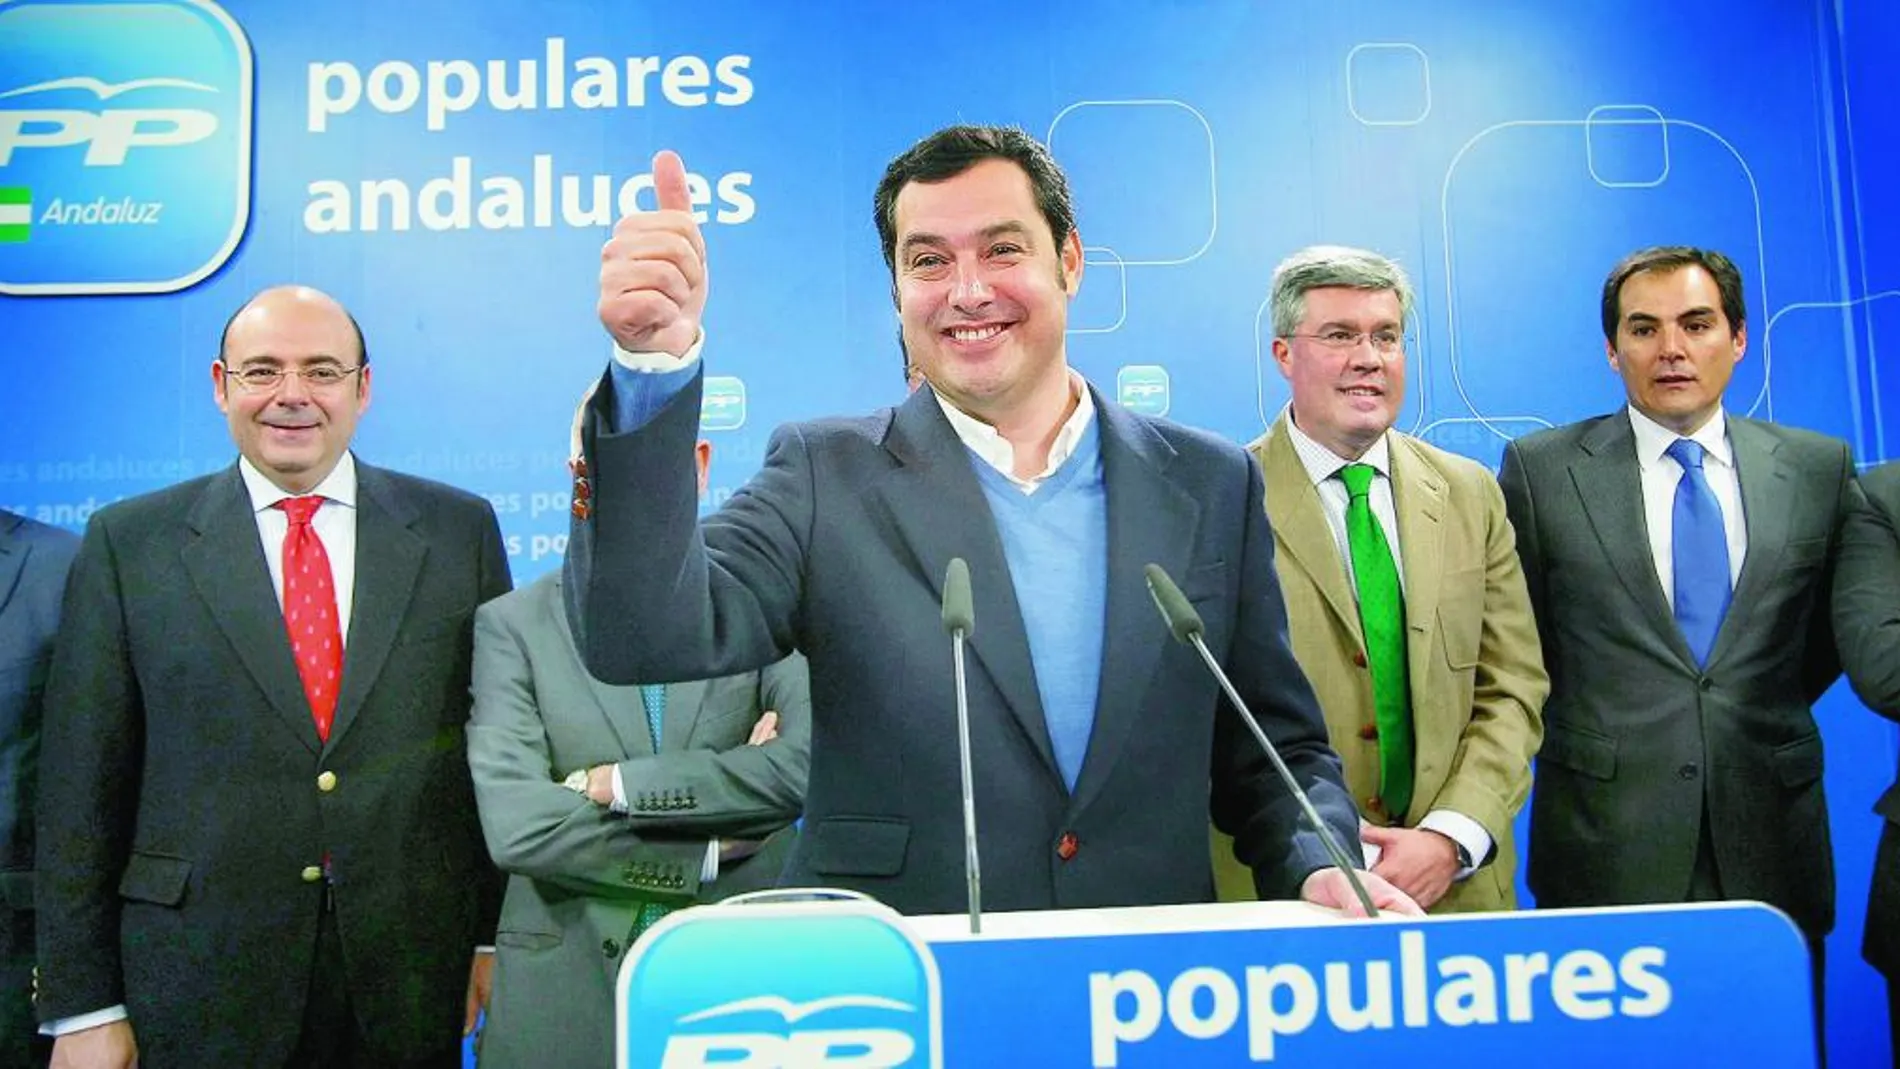 Juan Manuel Moreno Candidato del PP andaluz